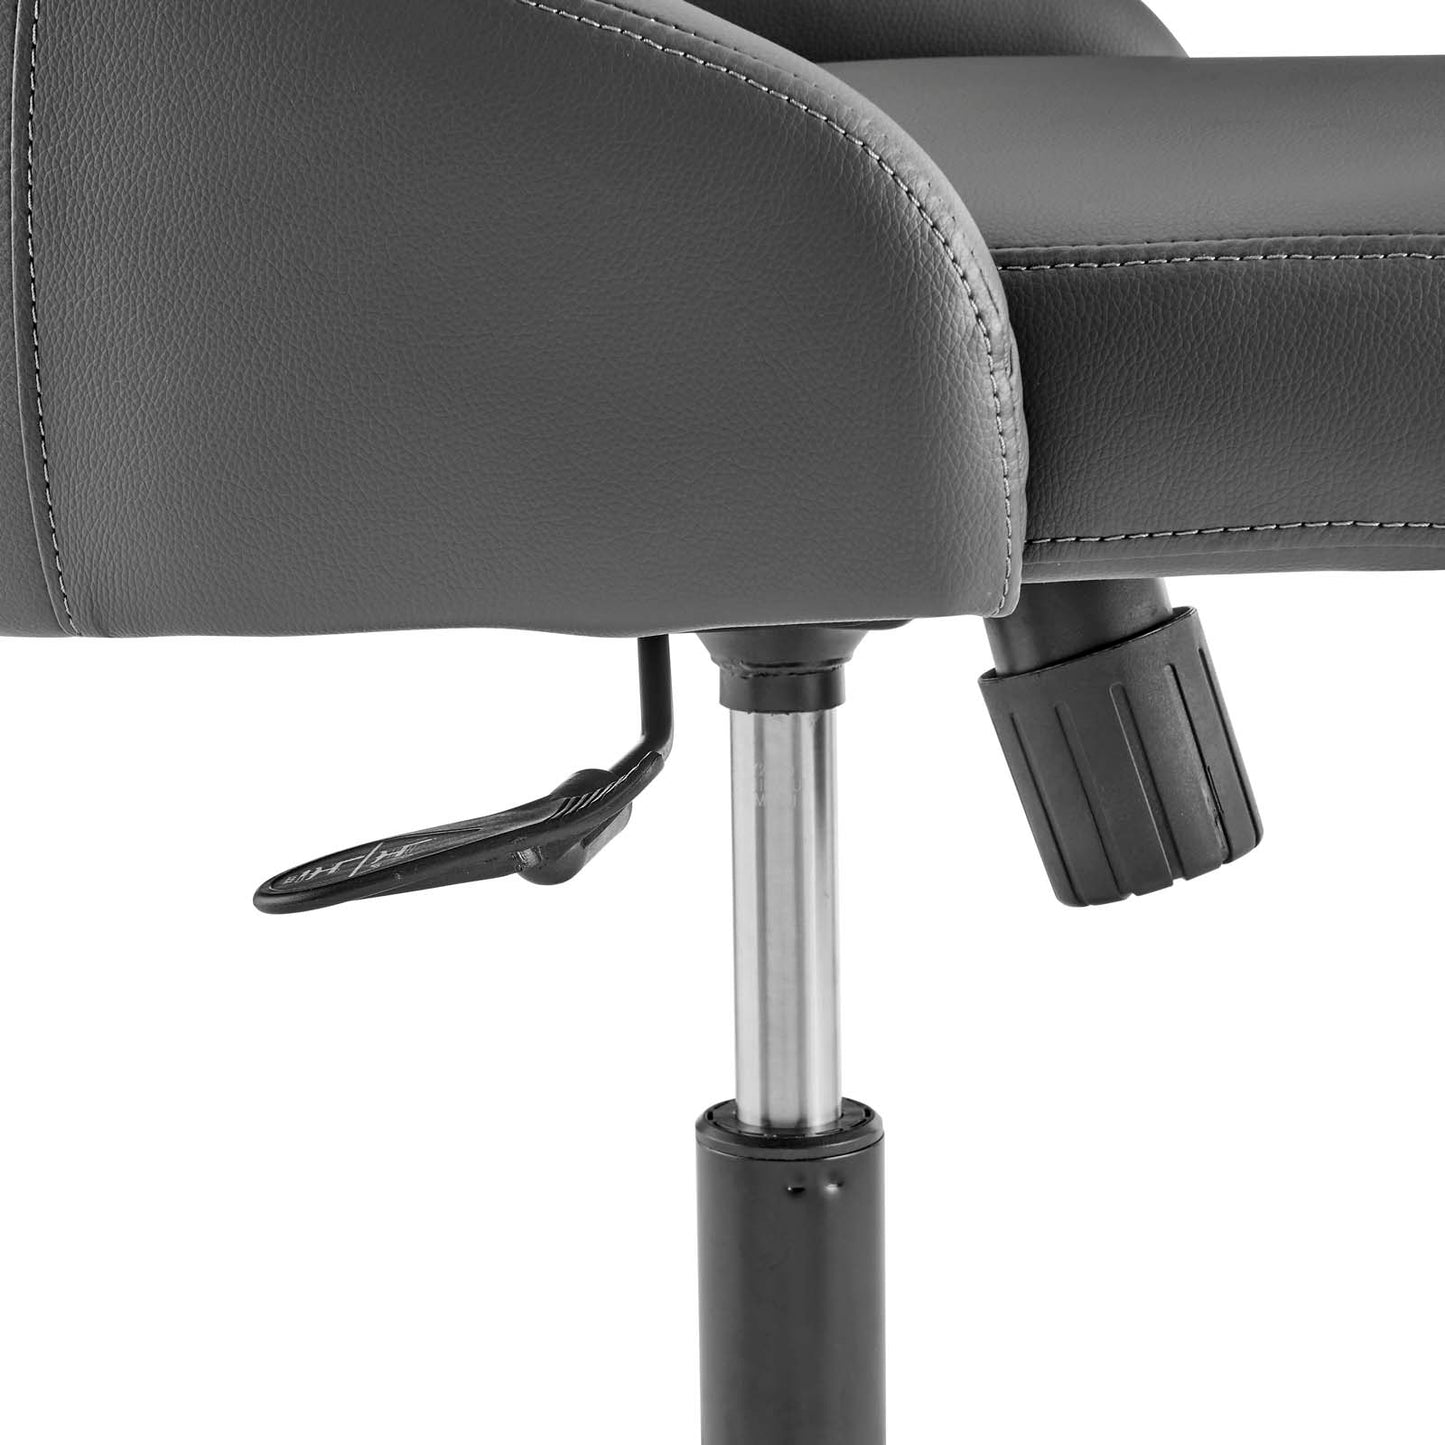 Designate Swivel Vegan Leather Office Chair Black Gray EEI-4372-BLK-GRY